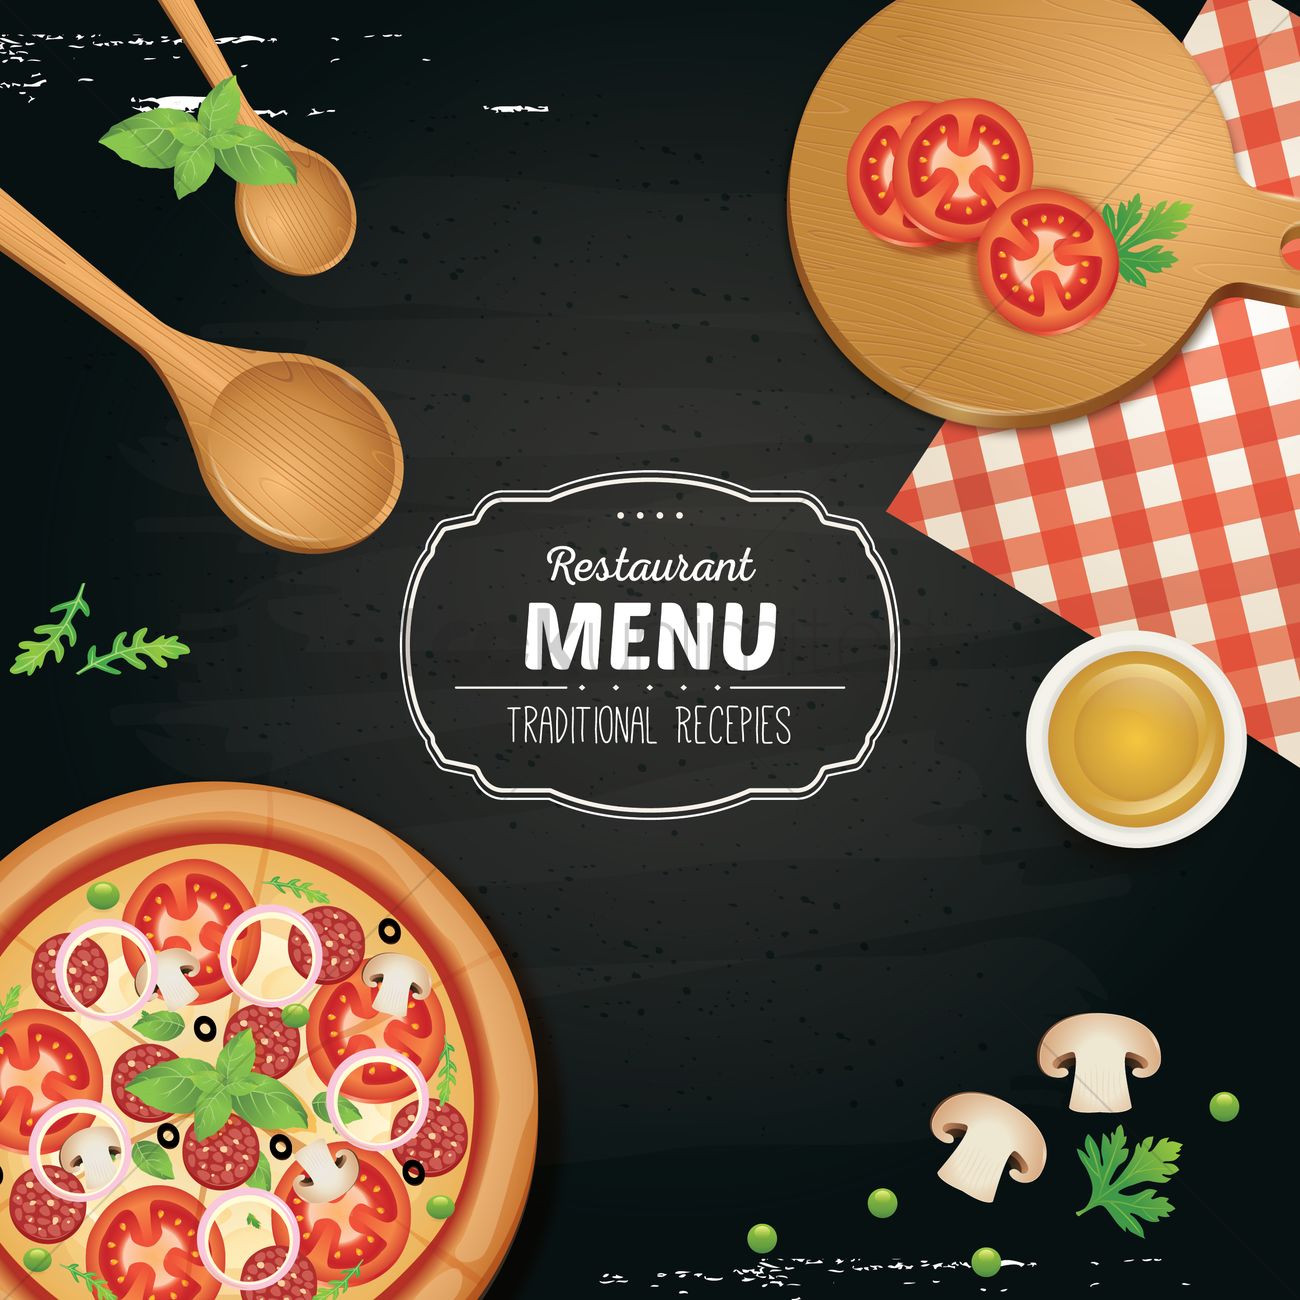 Restaurant menu wallpaper vector image